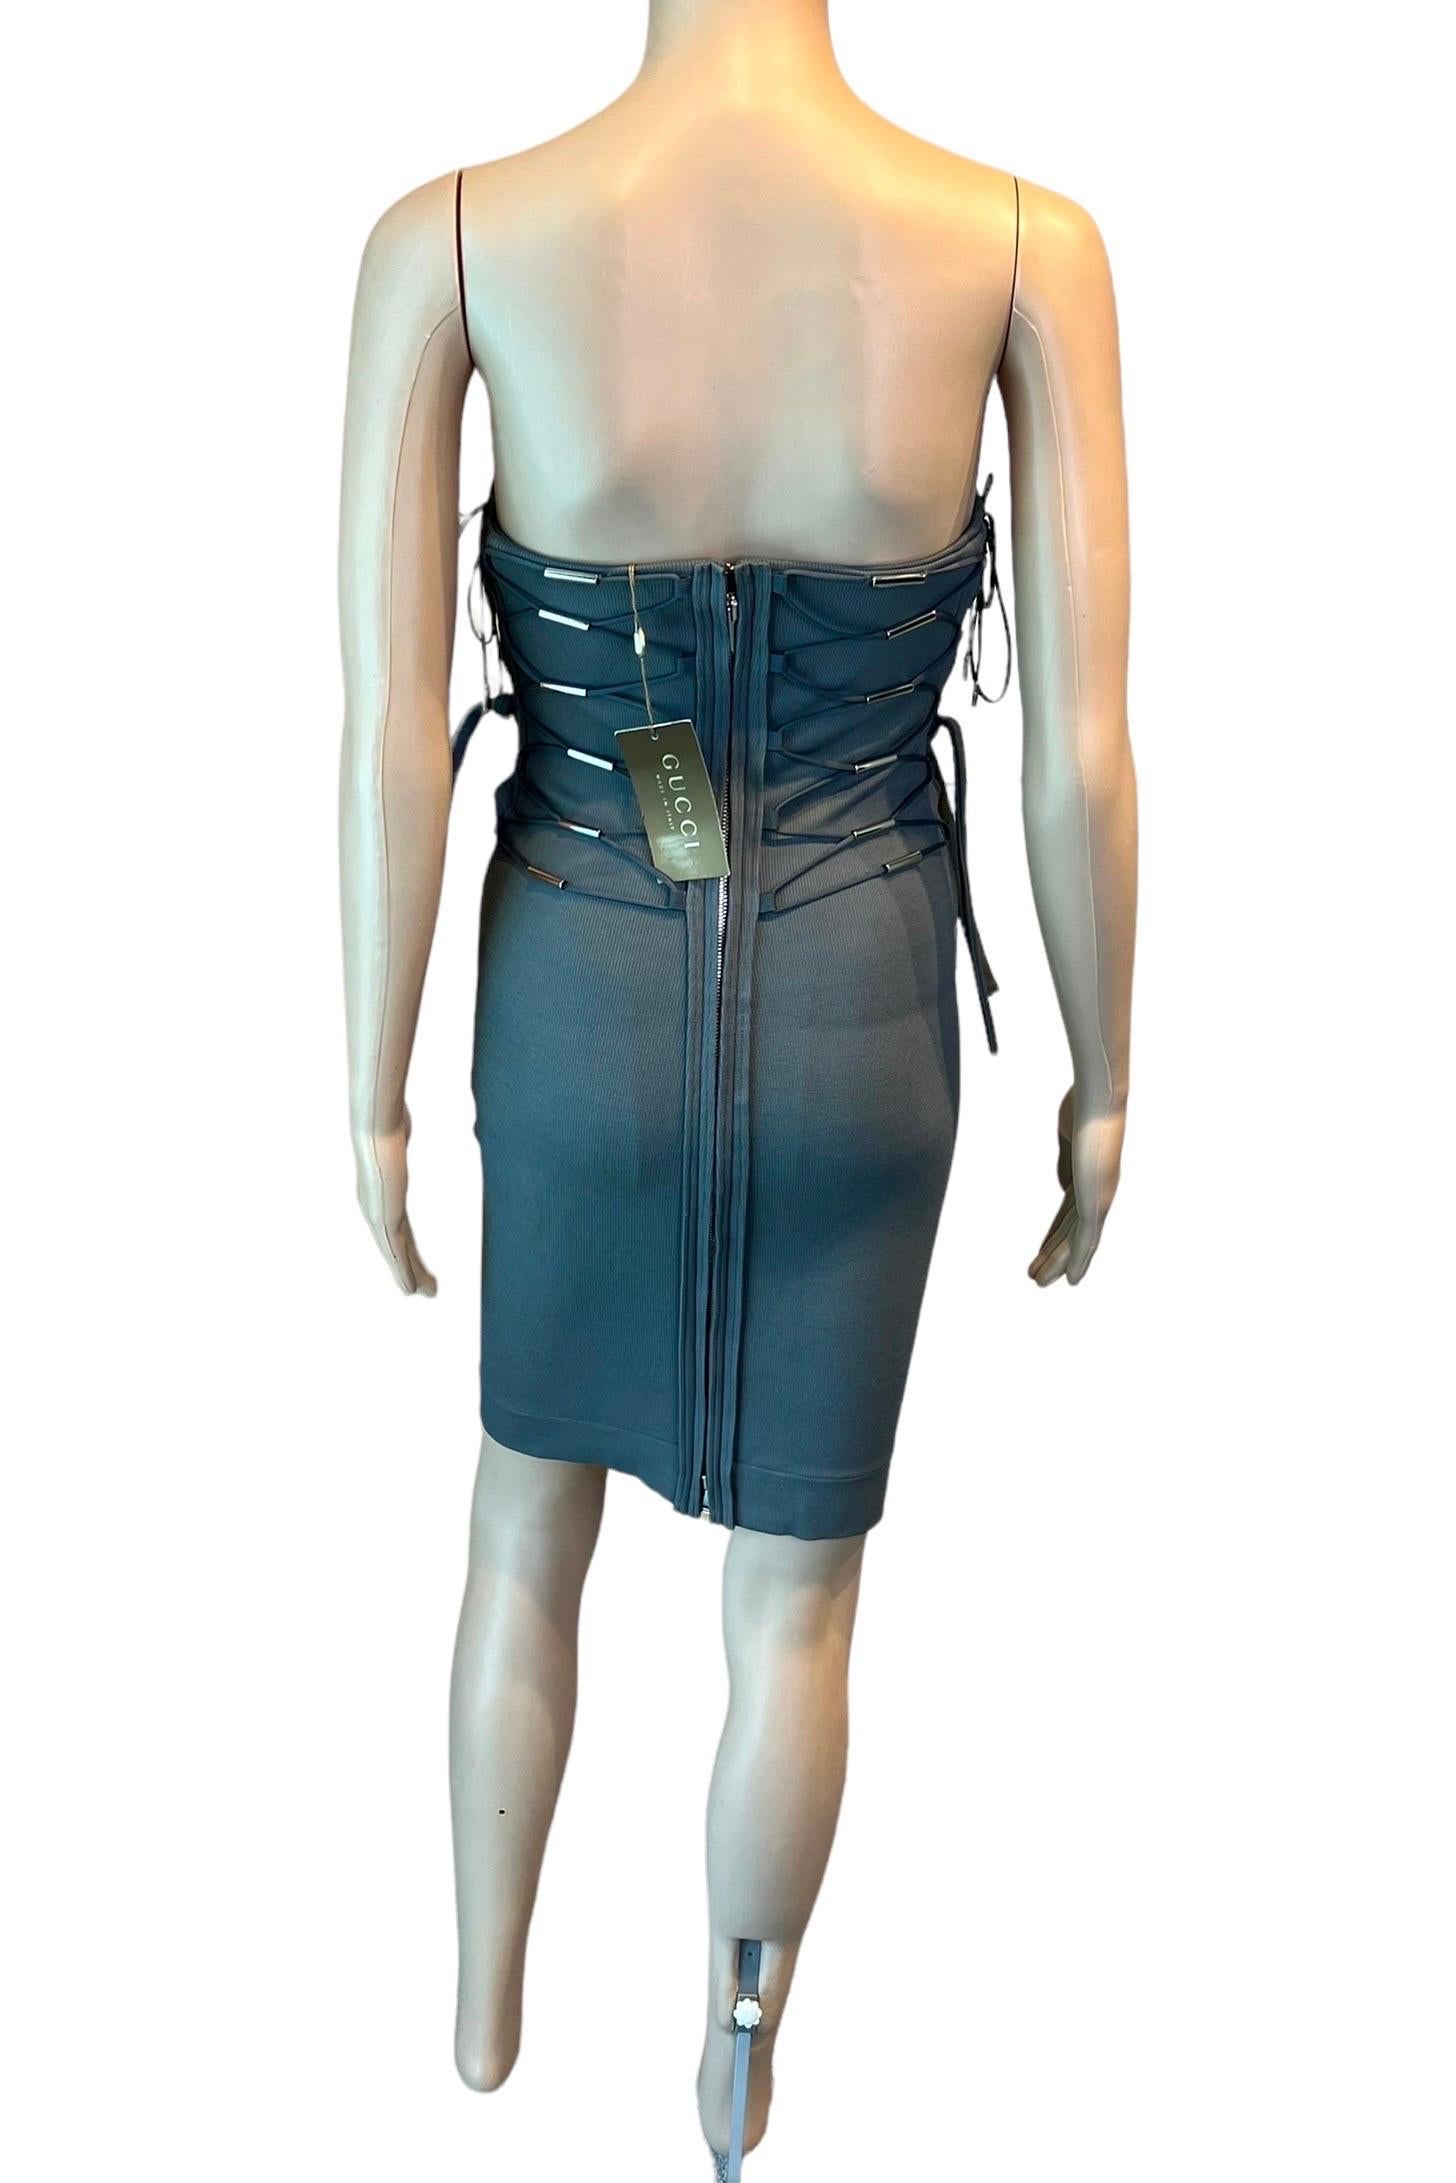 Gucci S/S 2010 Unworn Bodycon Lace Up Bandage Grey Mini Dress For Sale 1